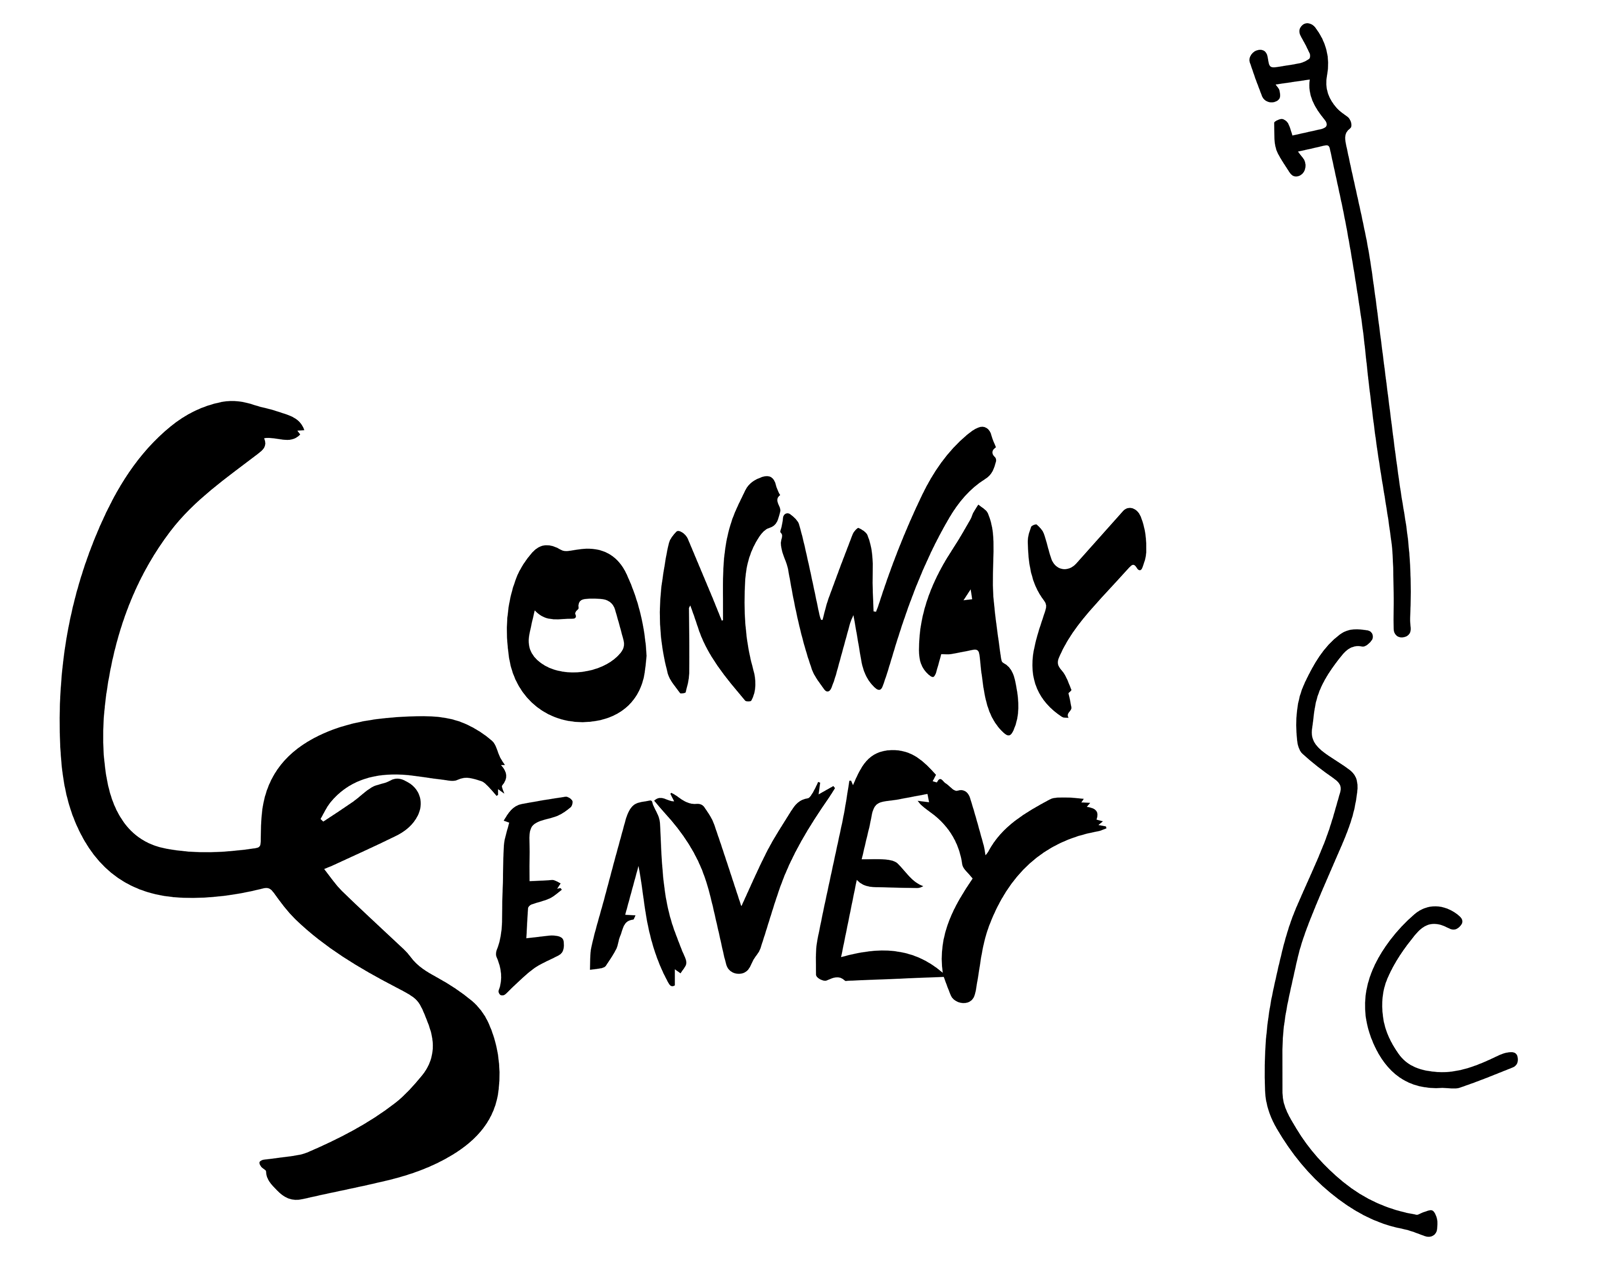 Conway Seavey